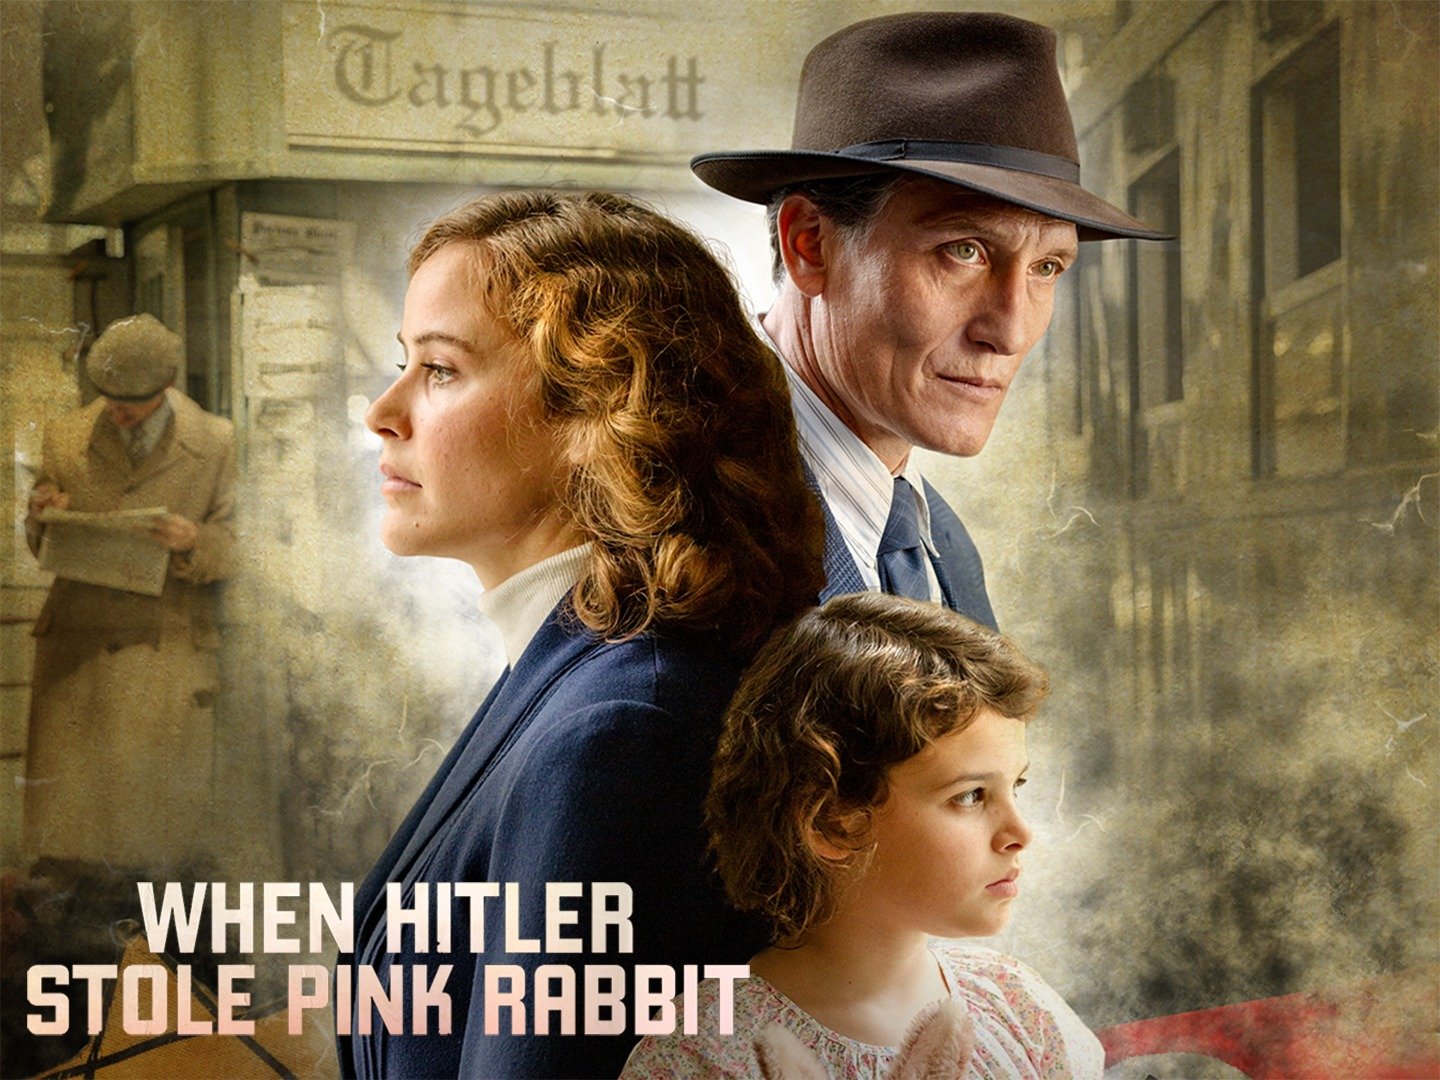 When Hitler Stole Pink Rabbit: Trailer 1 - Trailers & Videos - Rotten ...